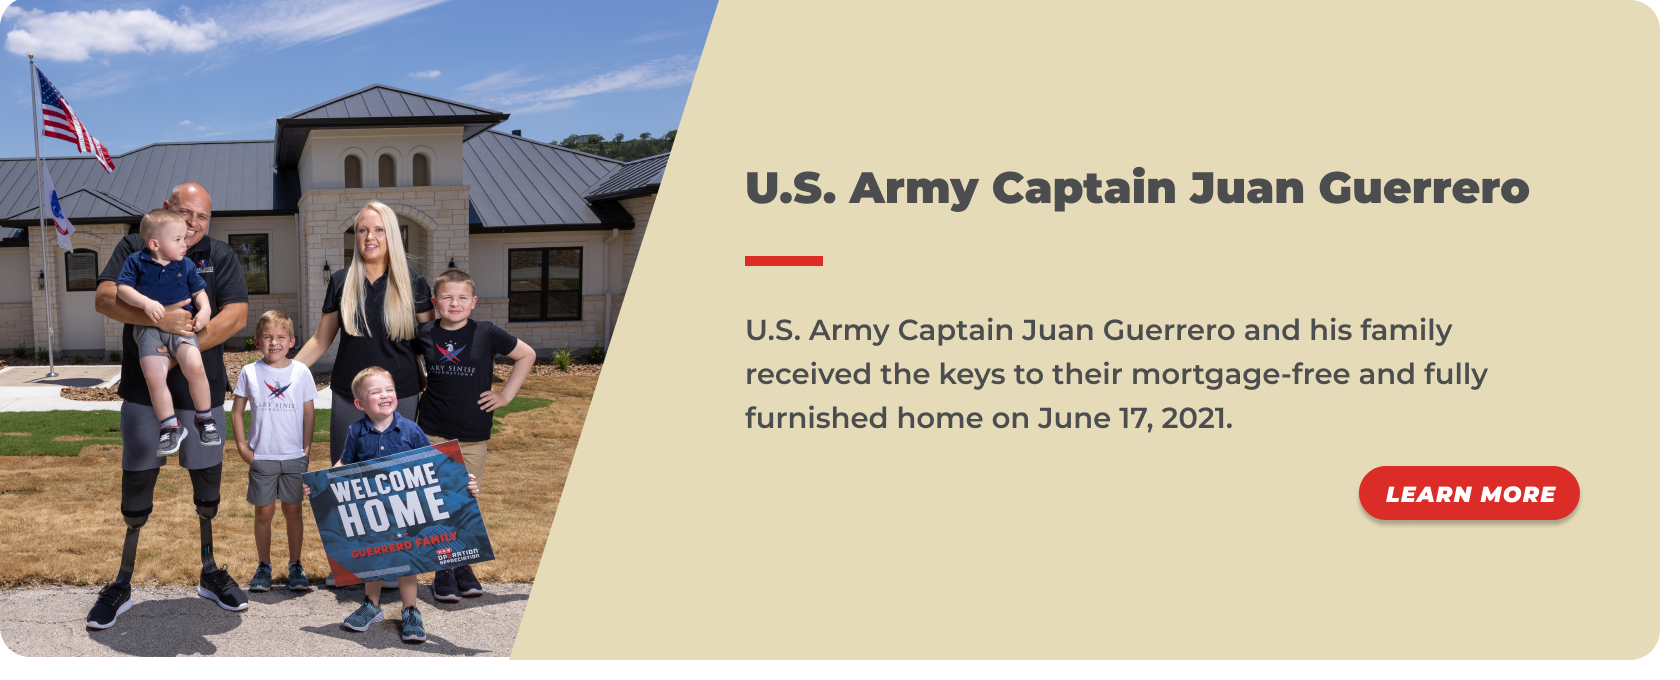 34 - U.S. Army Captain Juan Guerrero